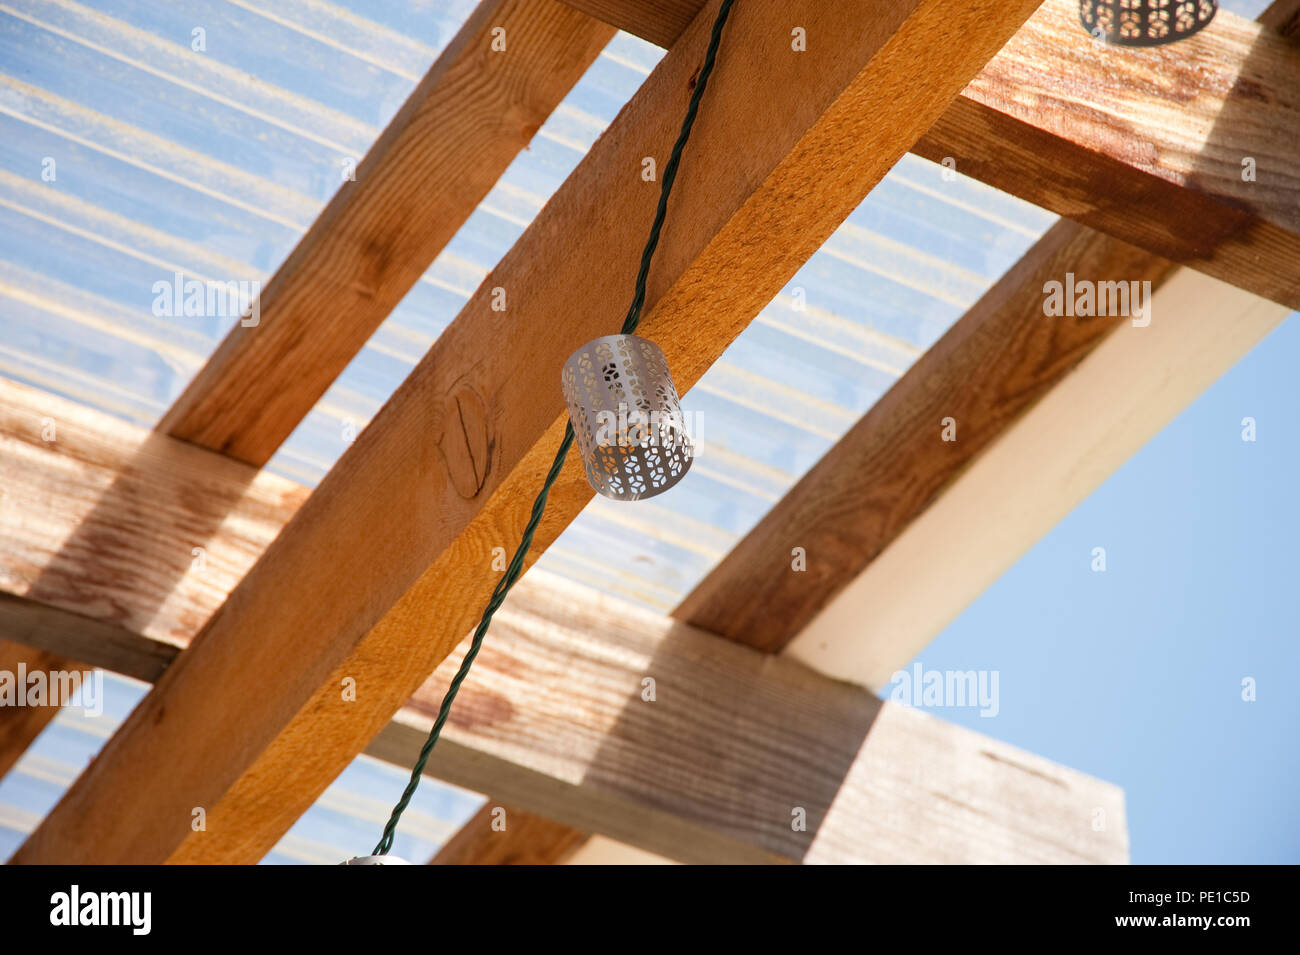 Decorative light shade and wooden beams Stock Photo